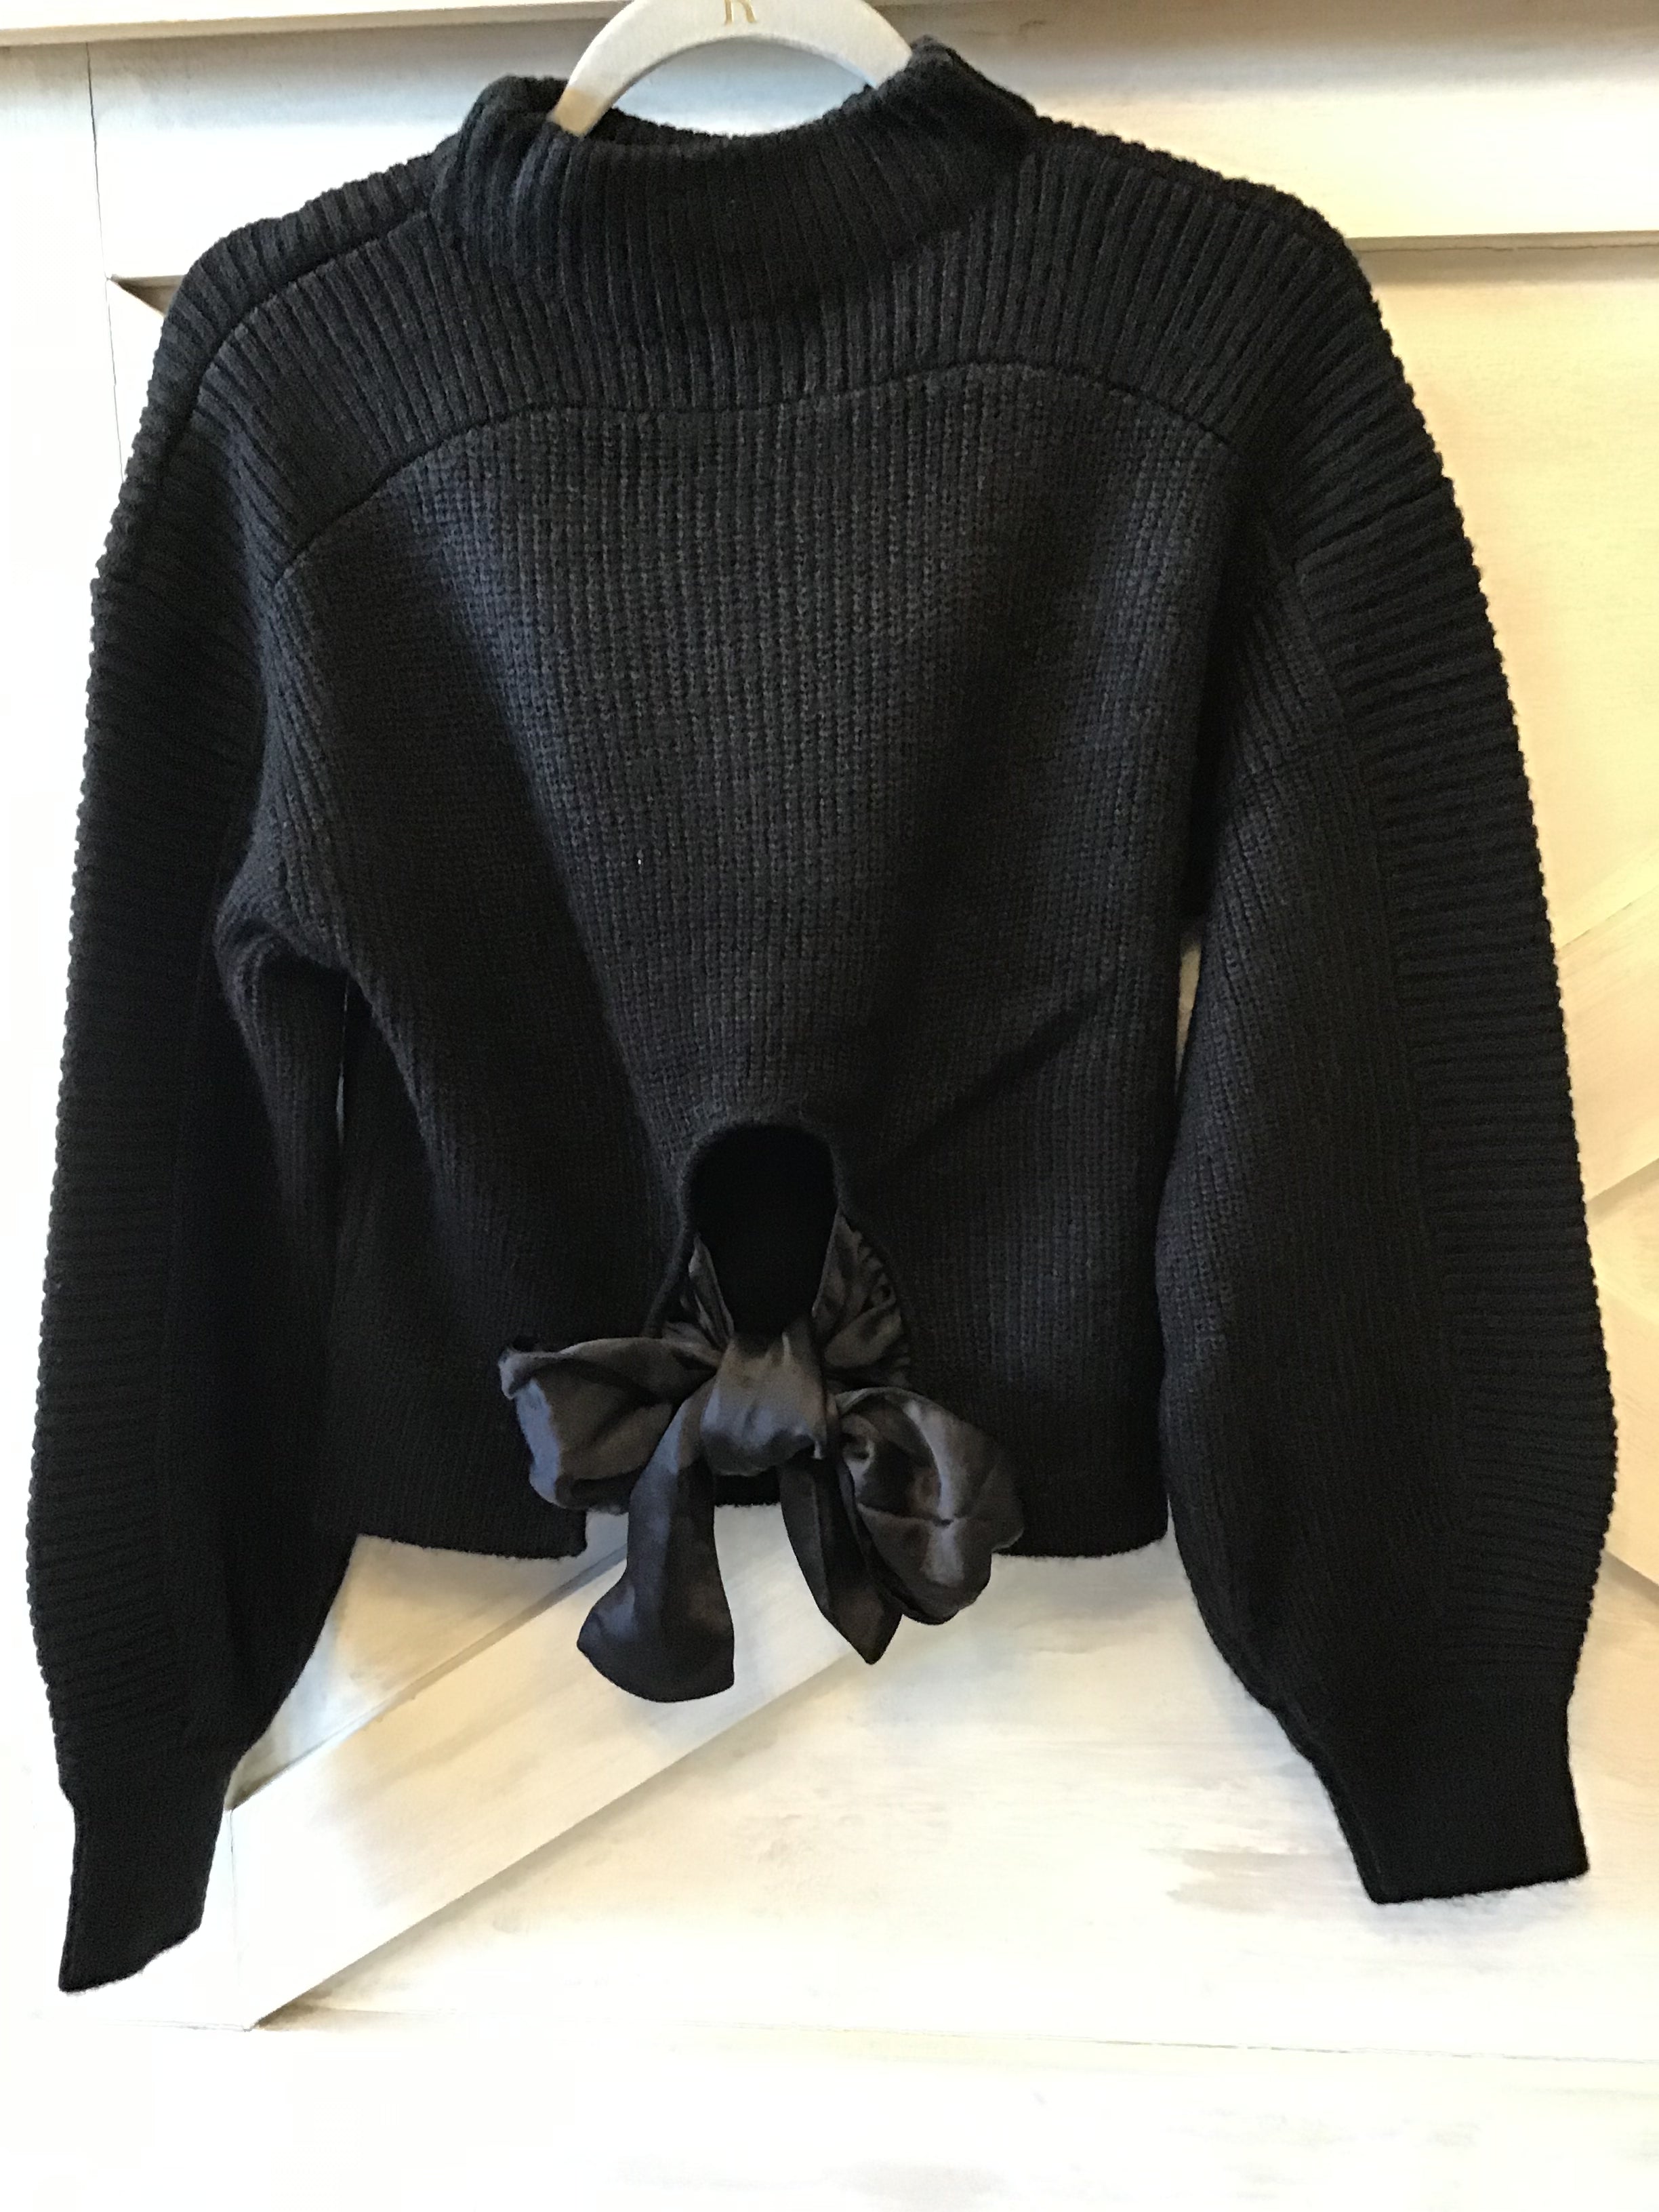 Bowdin Tieback Sweater